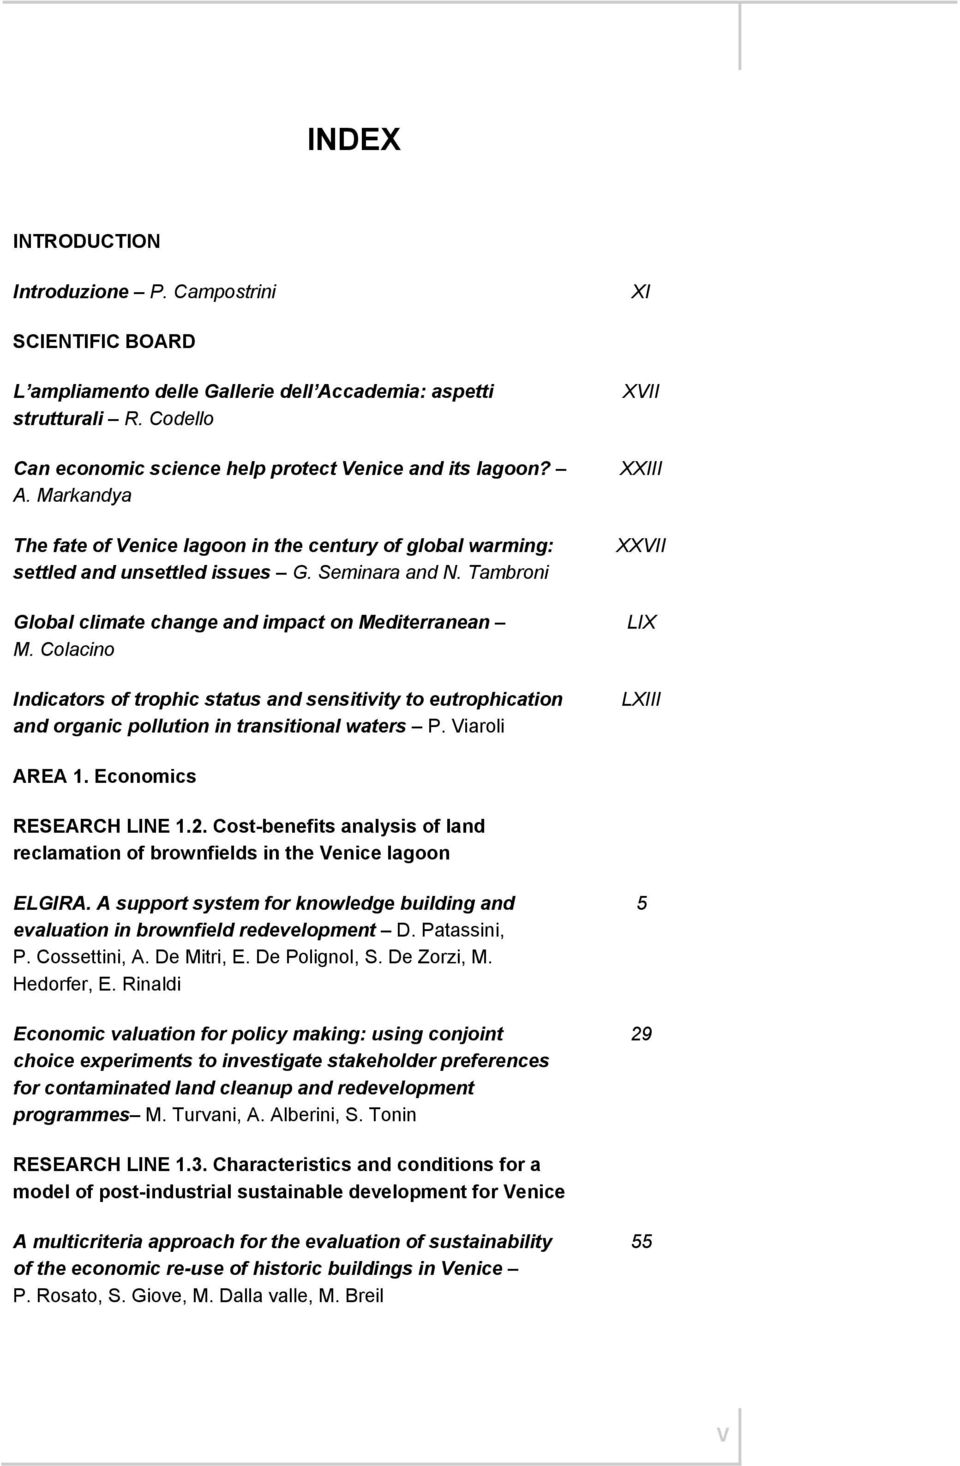 Colacino Indicators of trophic status and sensitivity to eutrophication and organic pollution in transitional waters P. Viaroli XVII XXIII XXVII LIX LXIII AREA 1. Economics RESEARCH LINE 1.2.